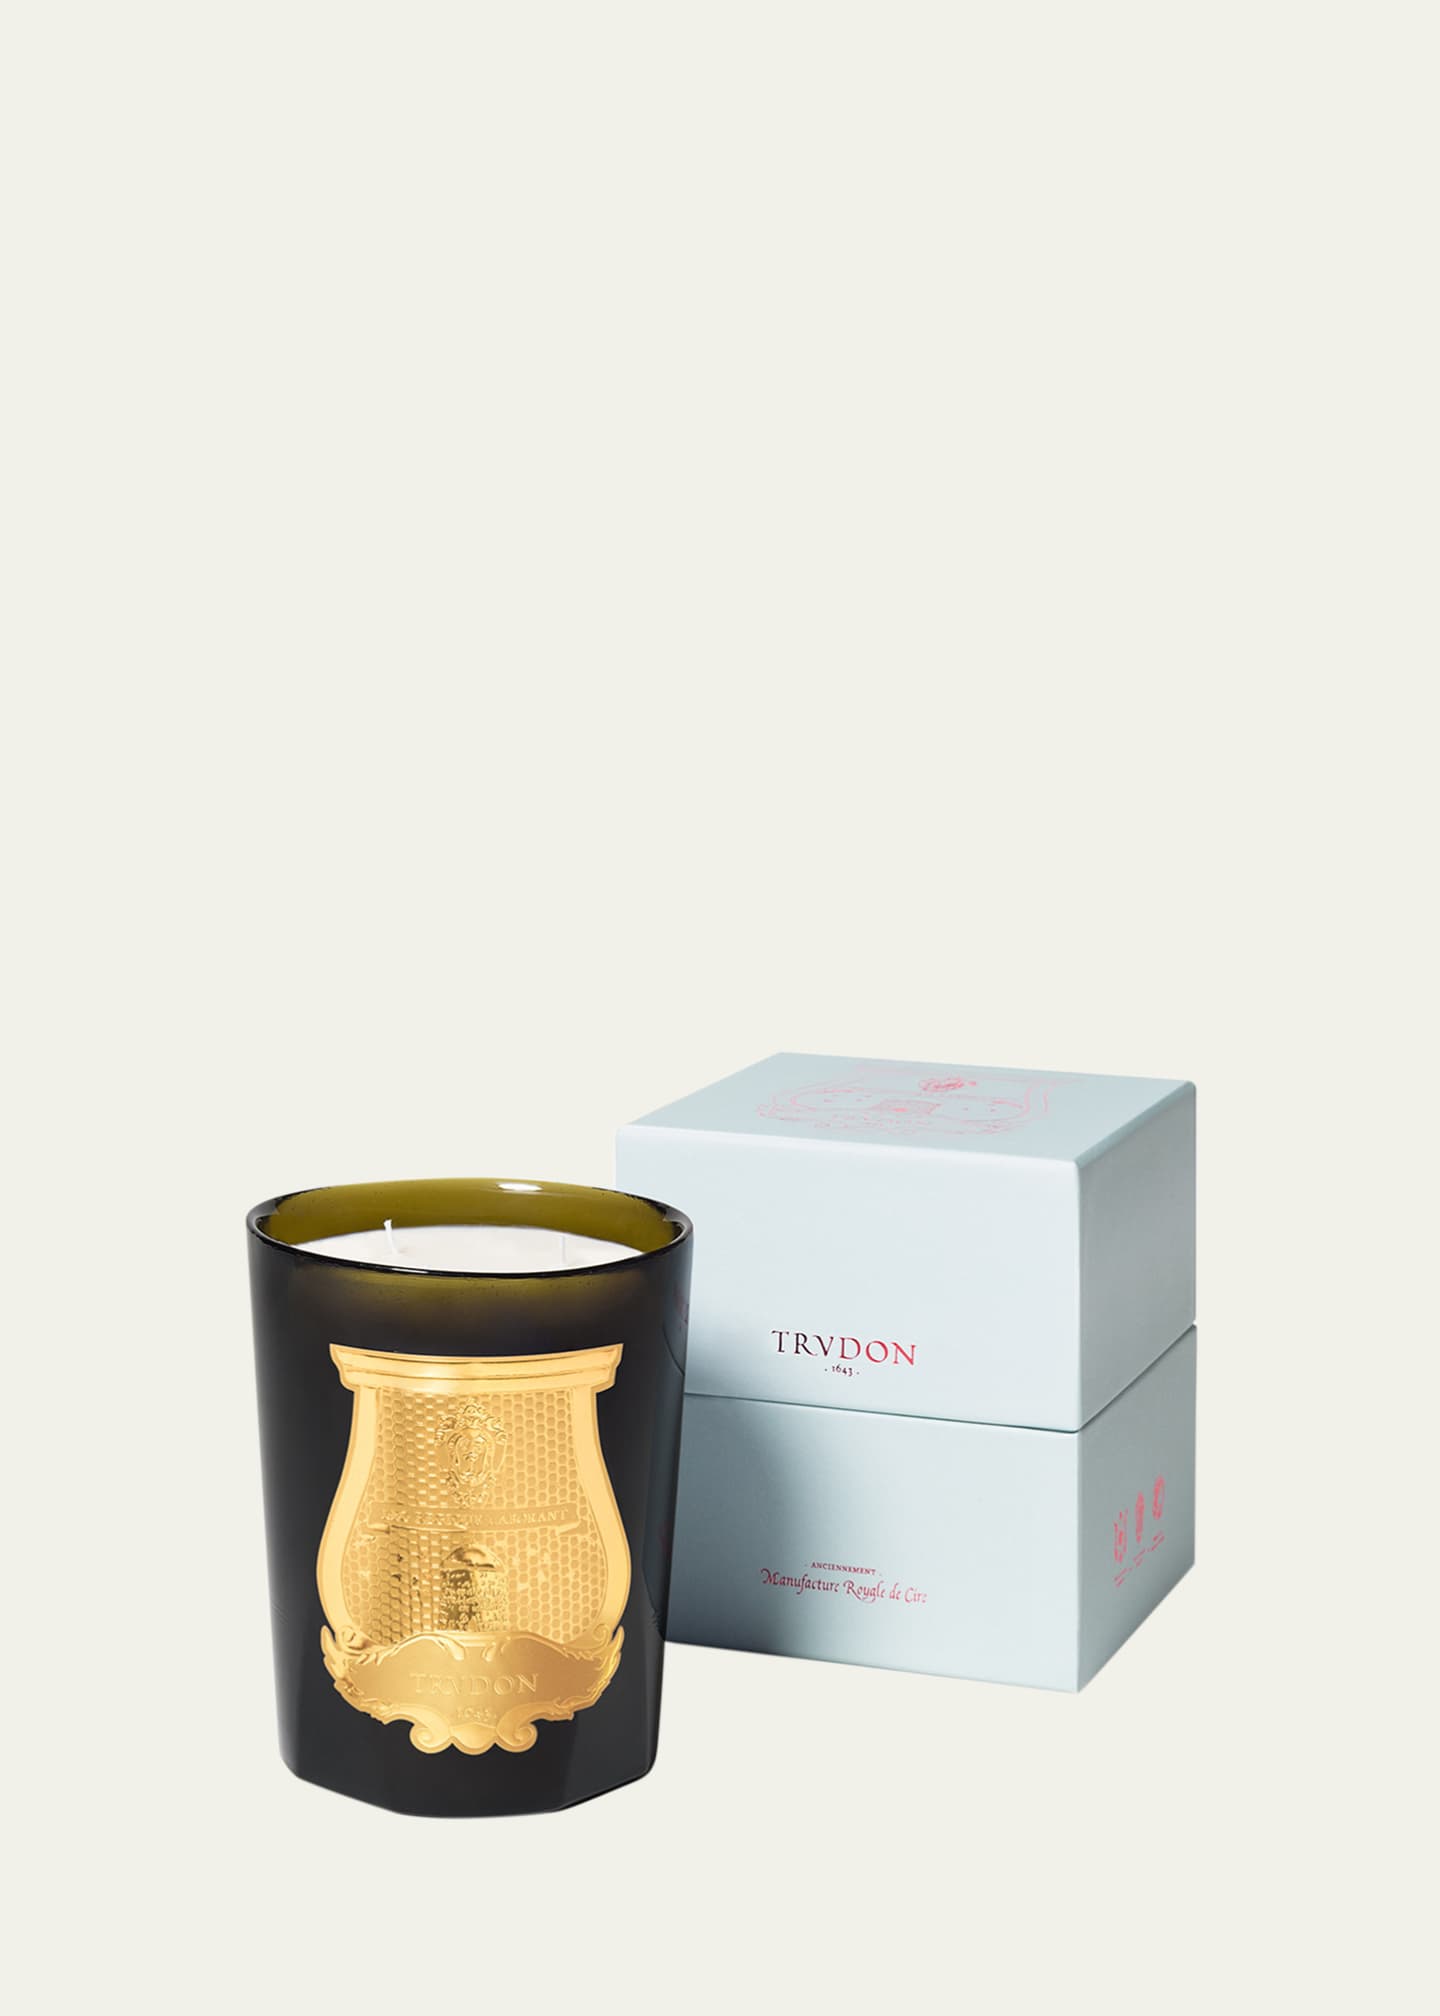 Trudon Abd El Kader Intermezzo Candle, Moroccan Mint Tea - Bergdorf Goodman